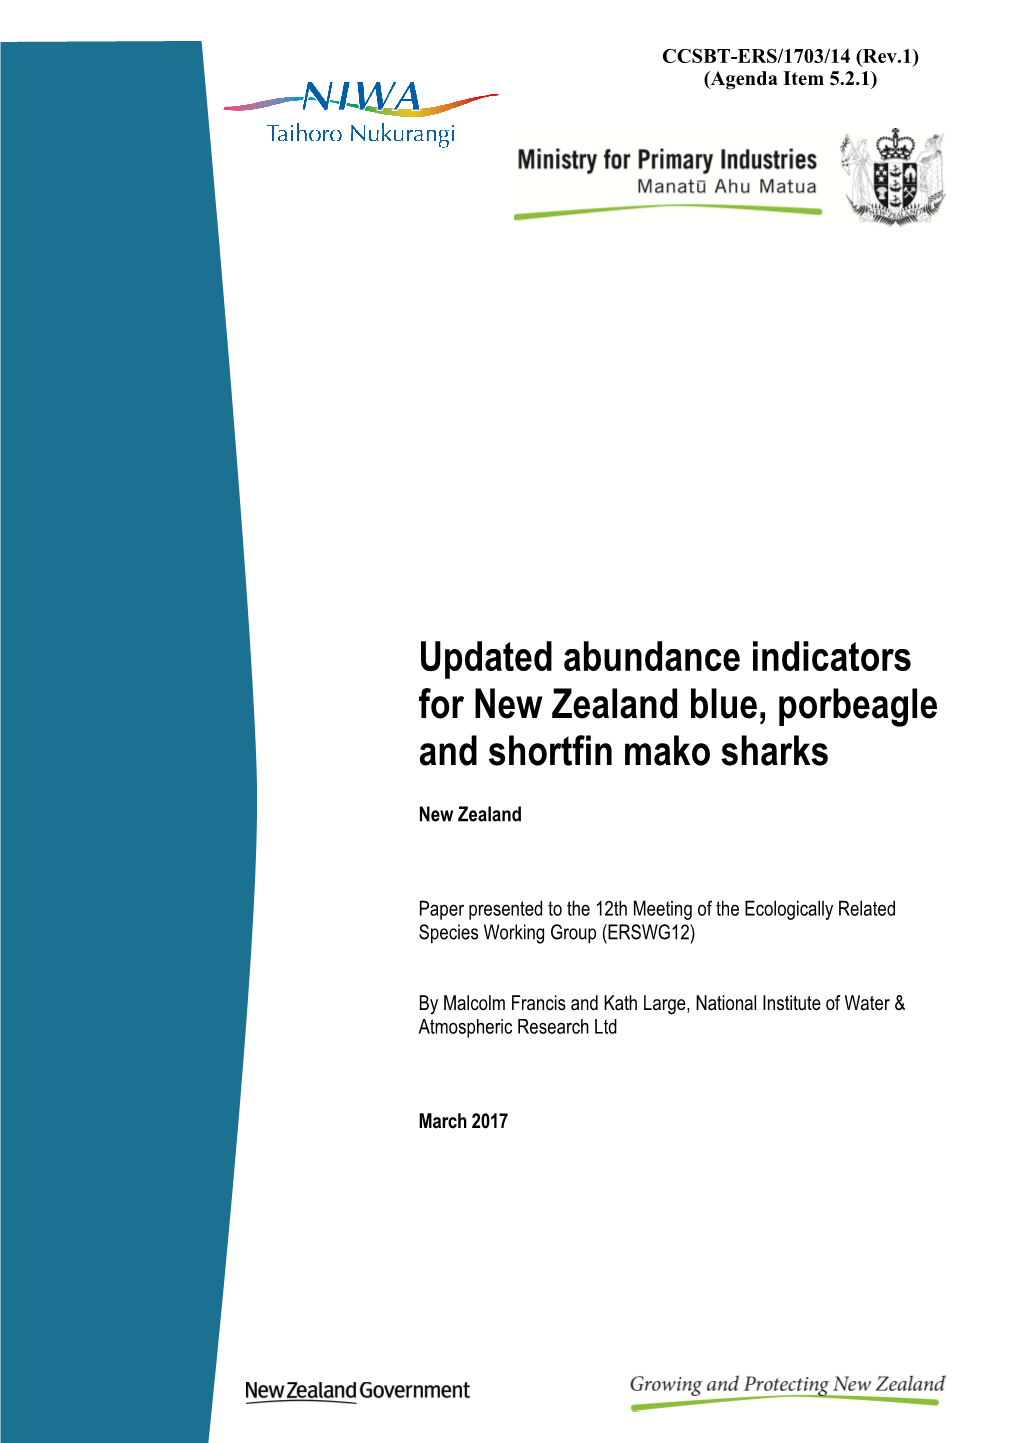 Updated Abundance Indicators for New Zealand Blue Porbeagle And